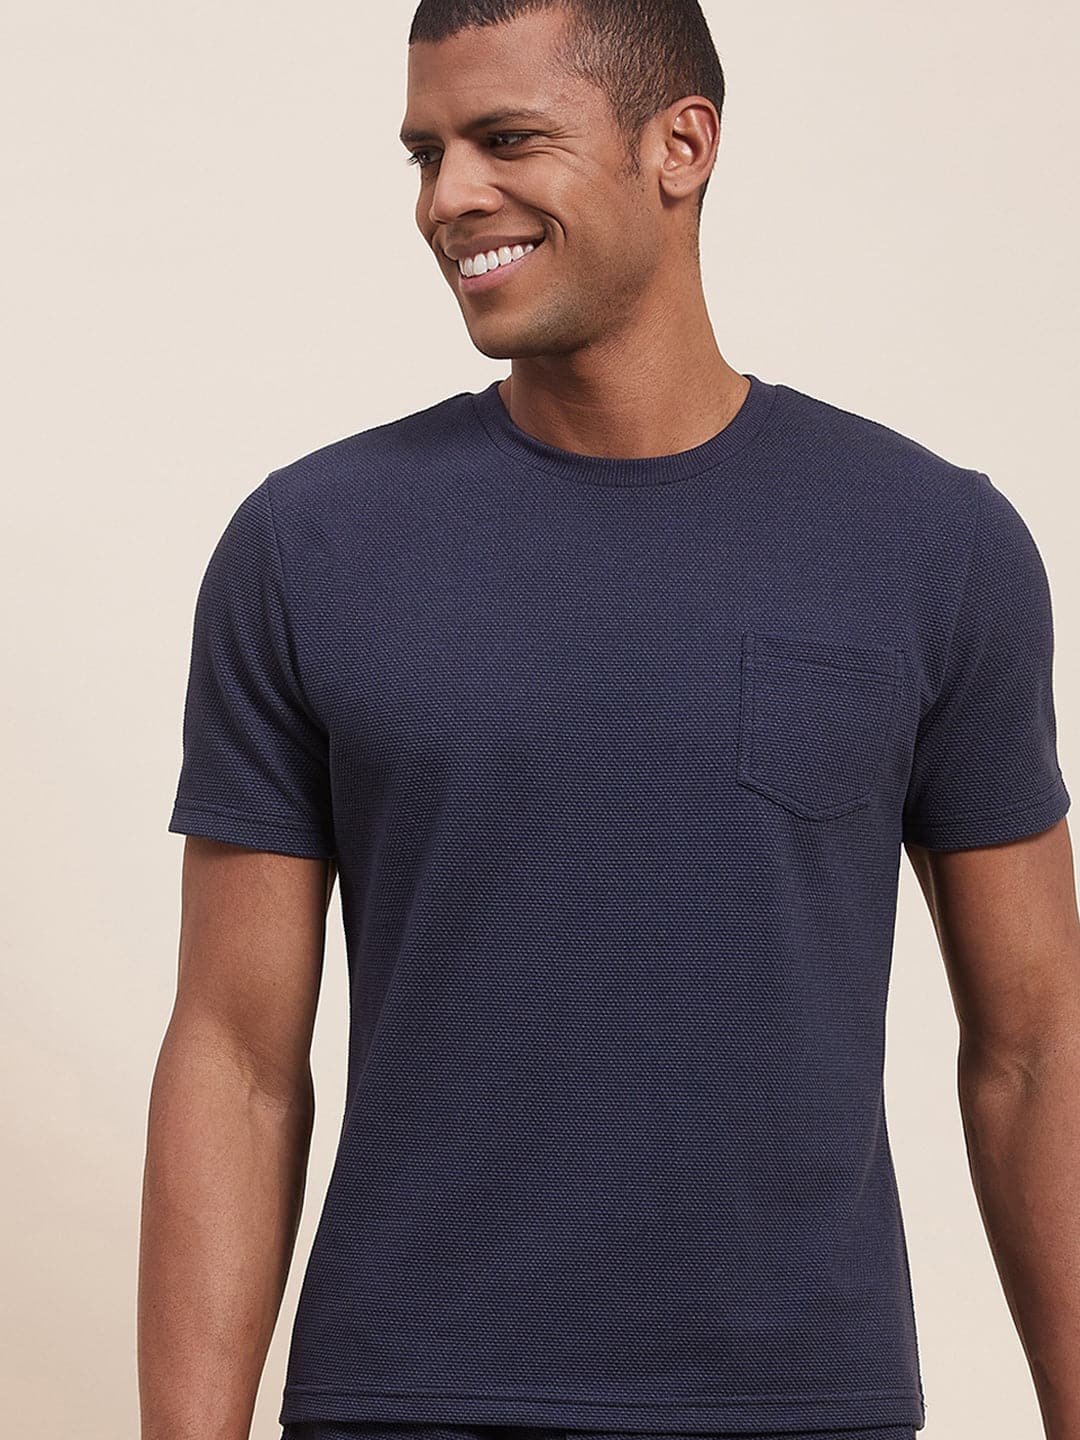 Men's Navy Slim Fit Pocket T-Shirt - LYUSH-MASCLN